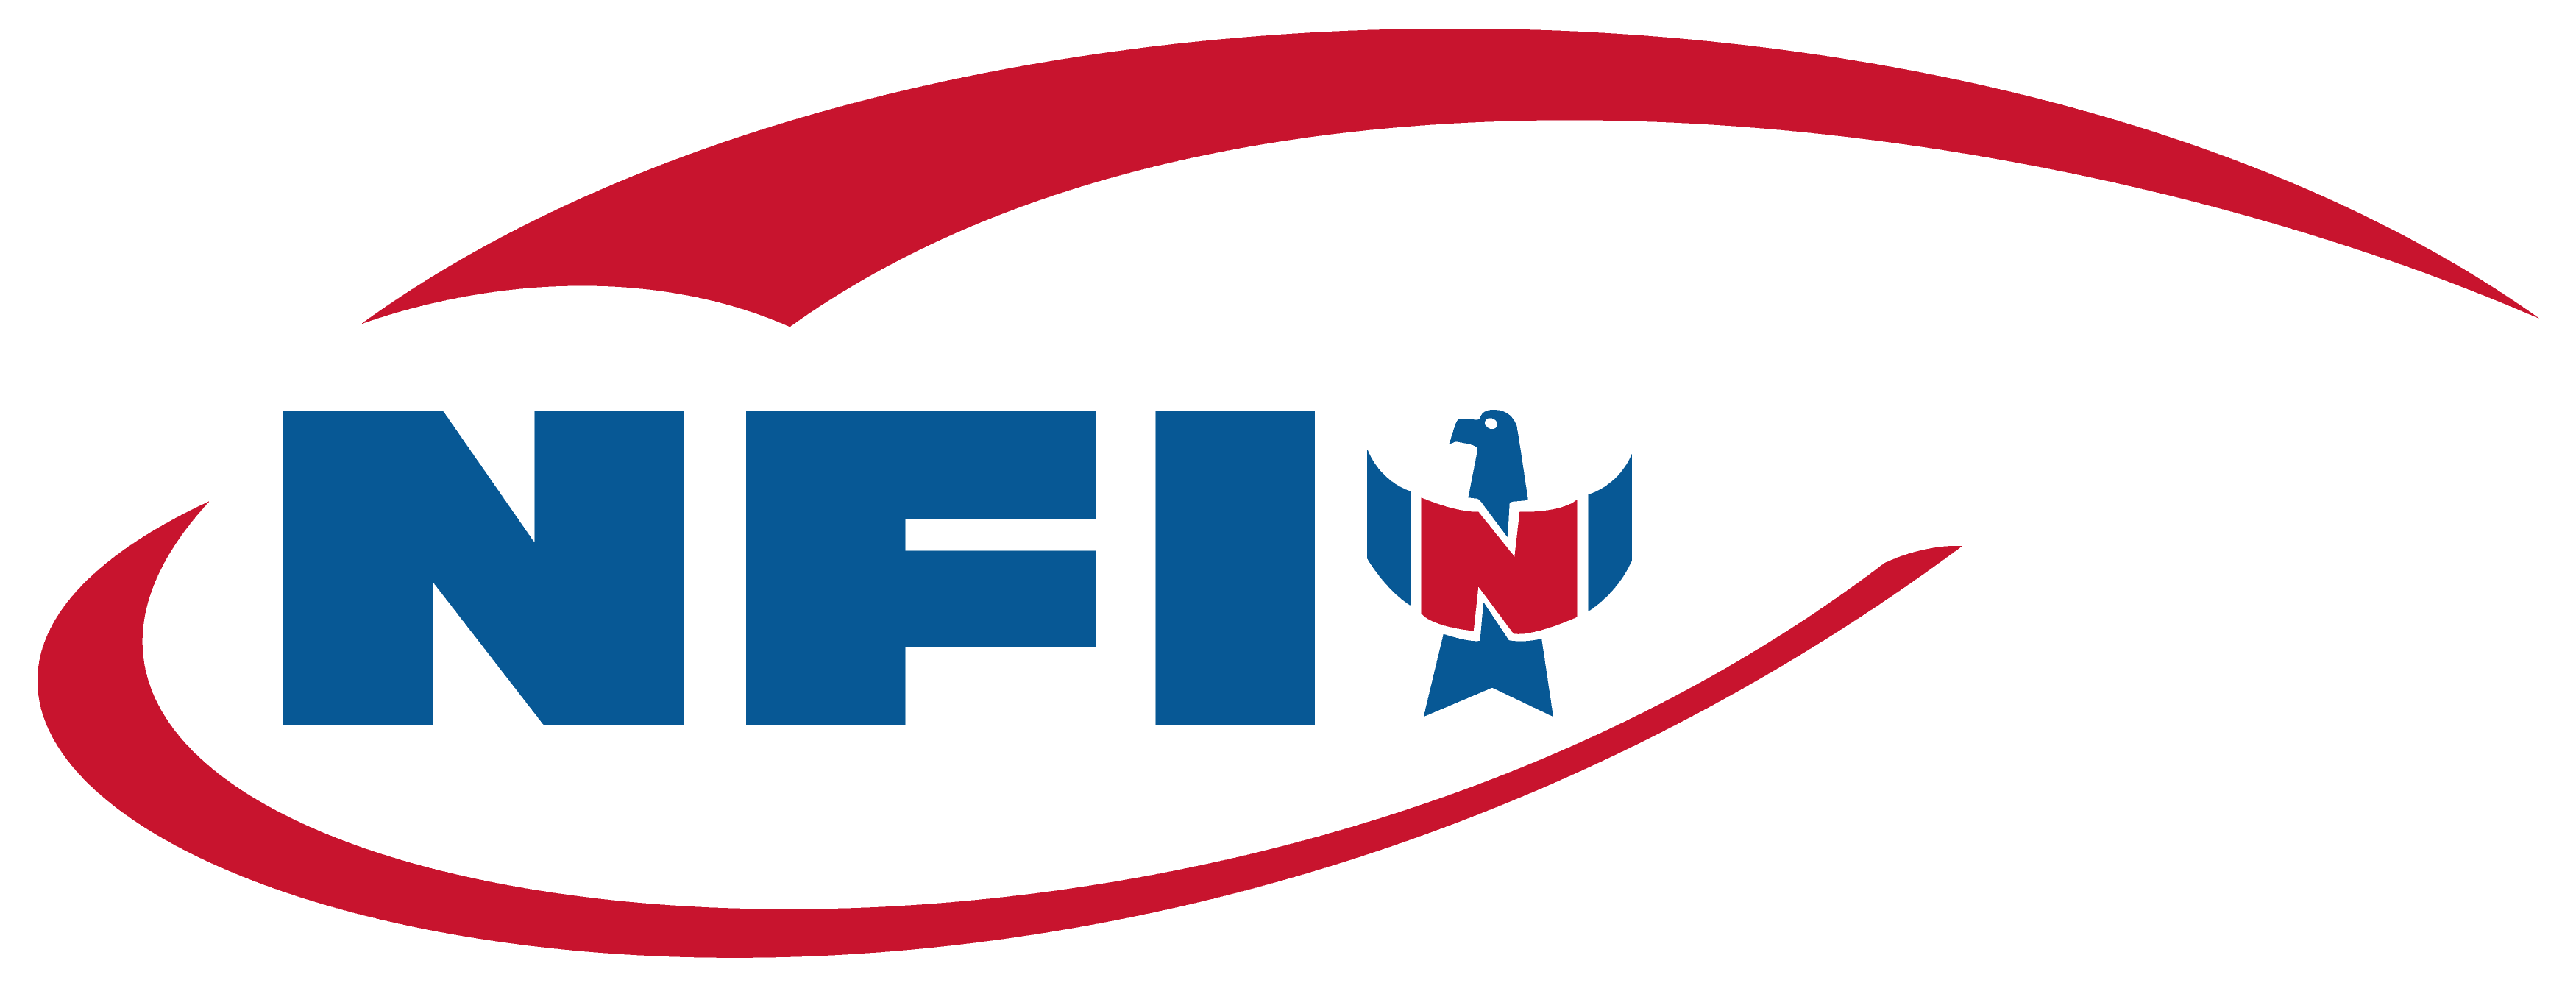 nfi-logo-web